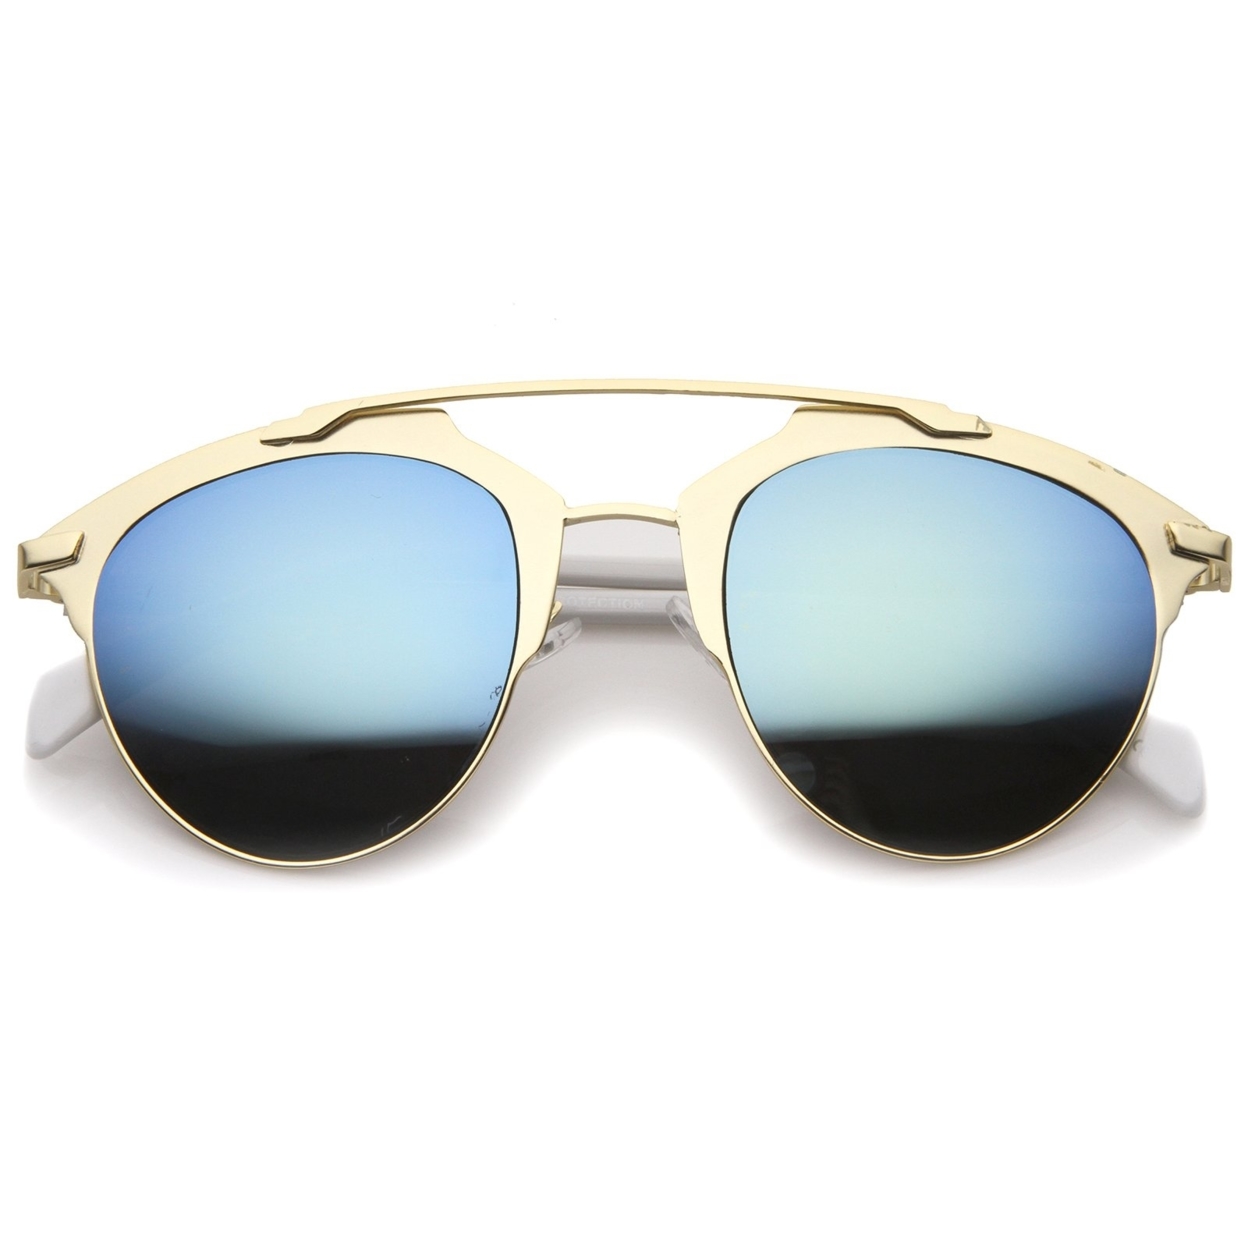 Modern Fashion Metal Double Bridge Mirror Lens Pantos Aviator Sunglasses 50mm - Gold-White / Blue Mirror